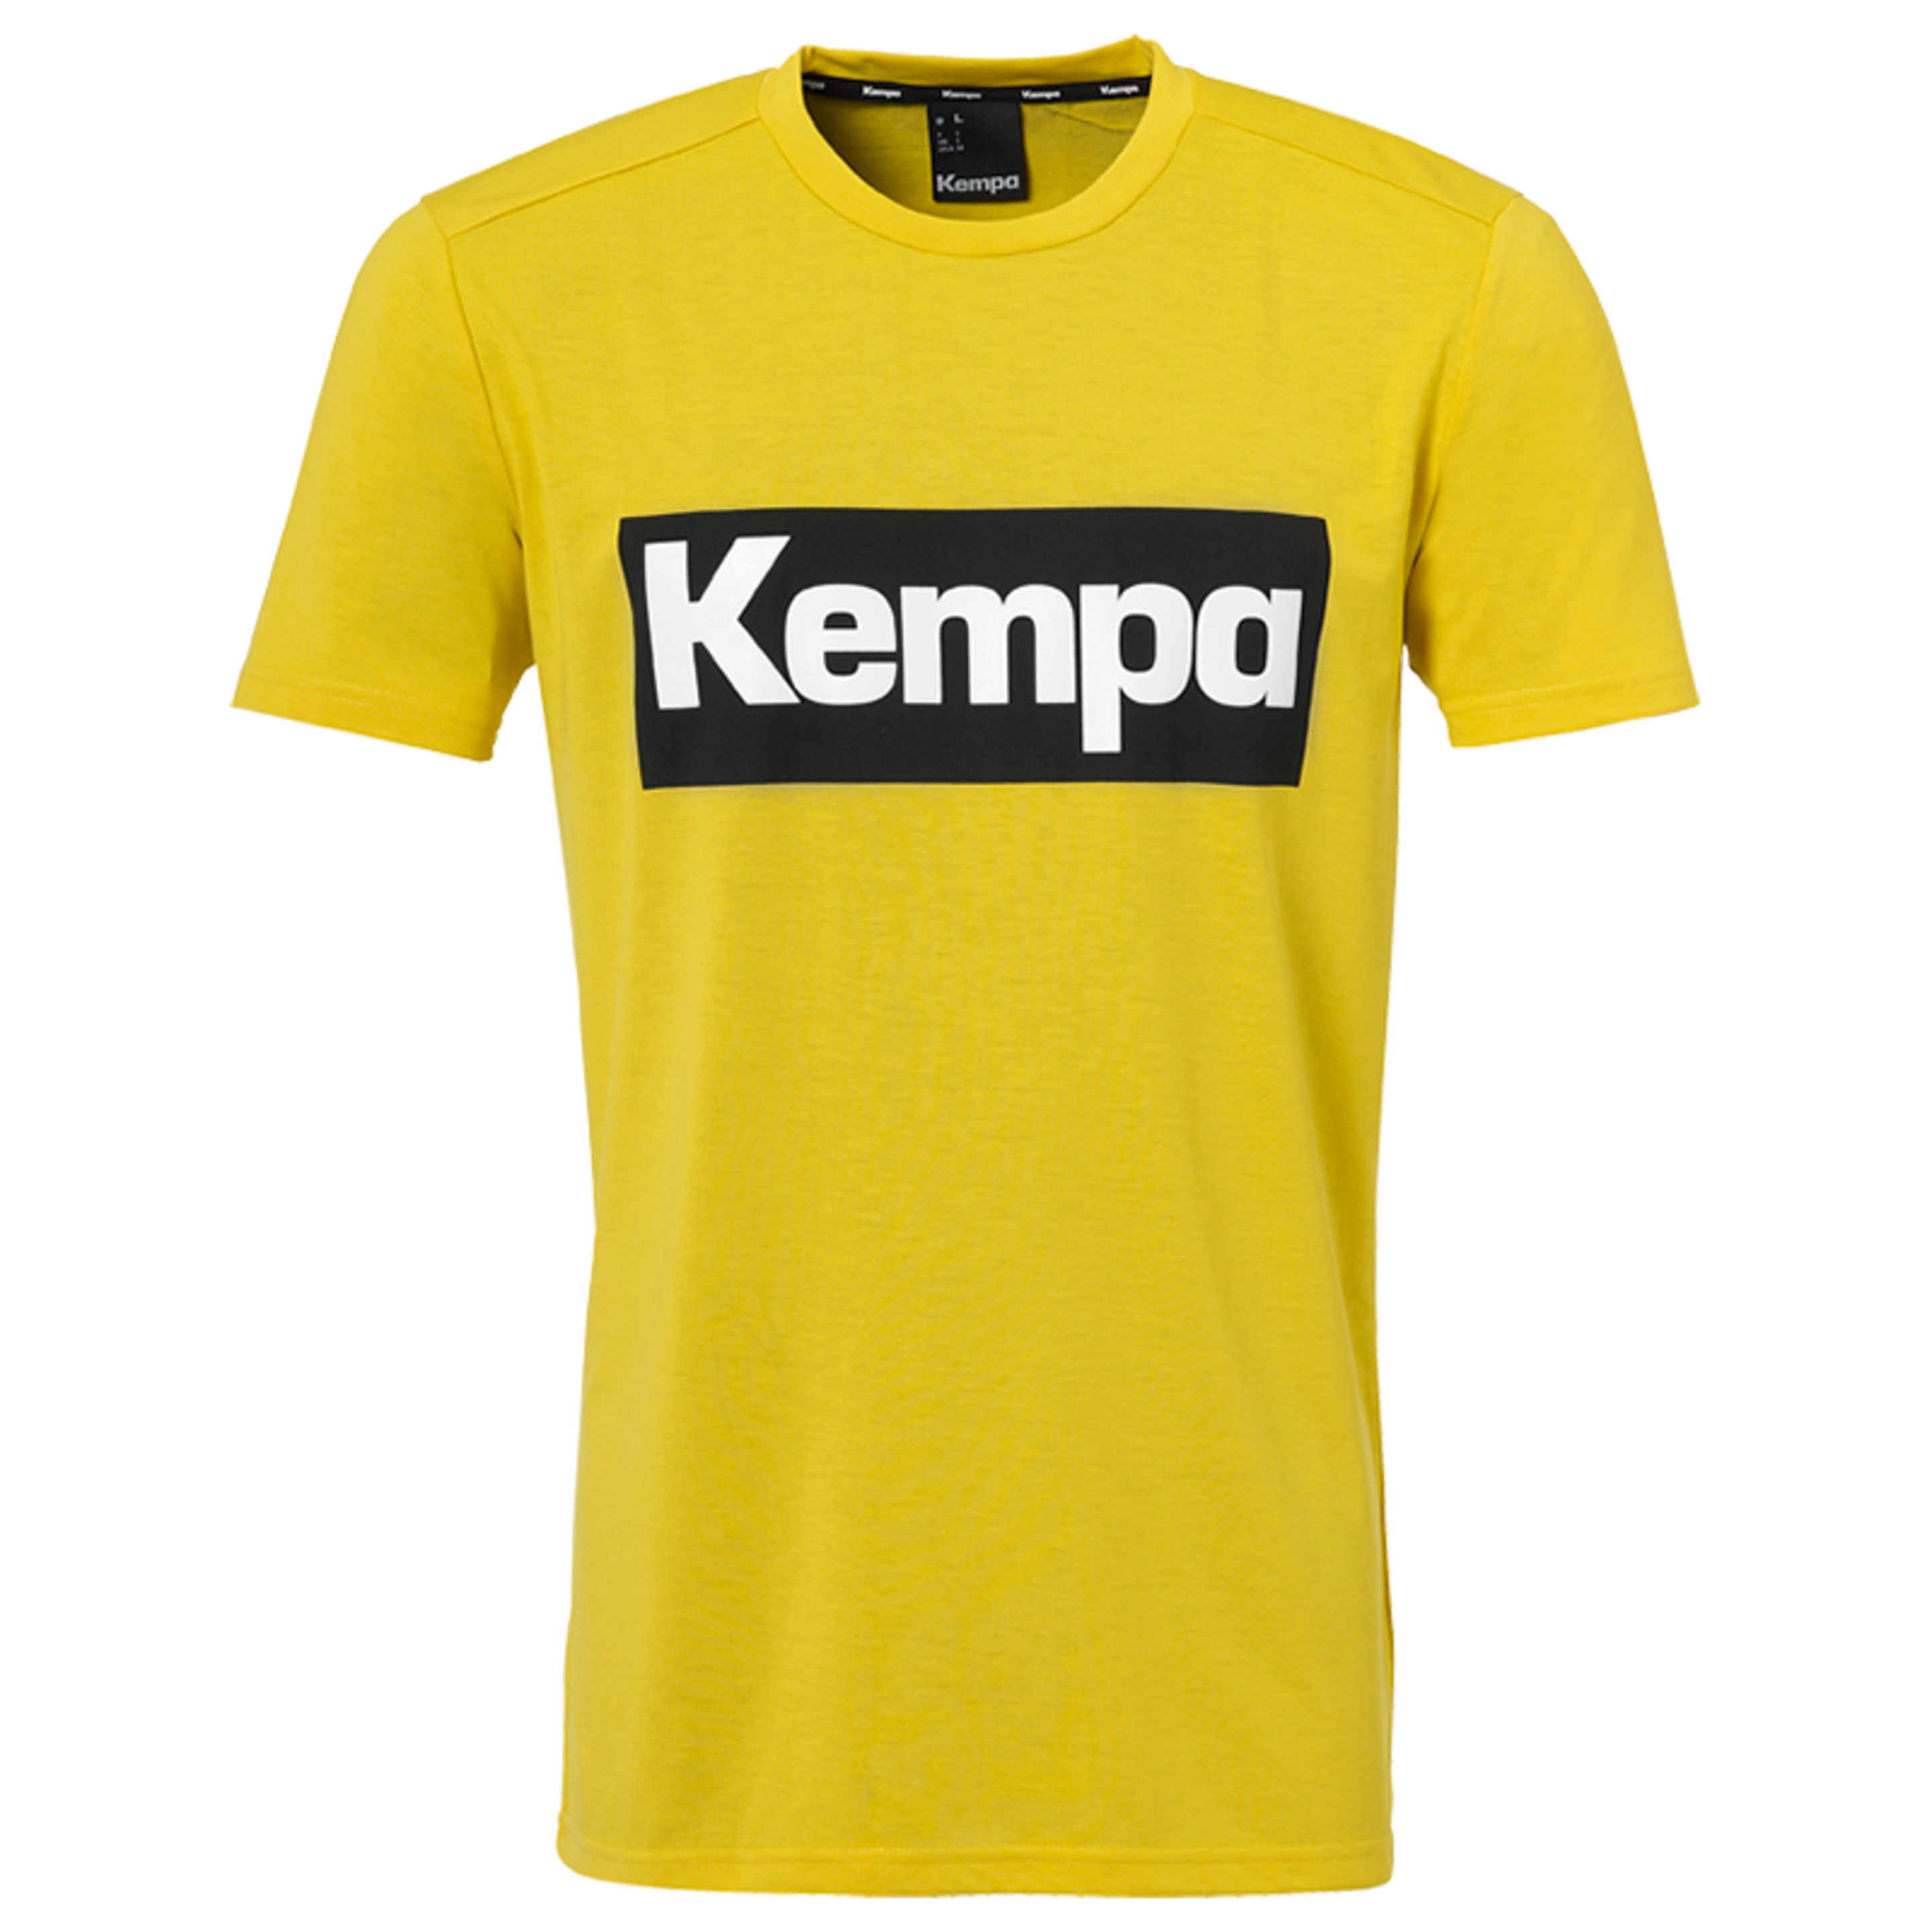 Laganda T-shirt Mostaza Kempa - mostaza - 